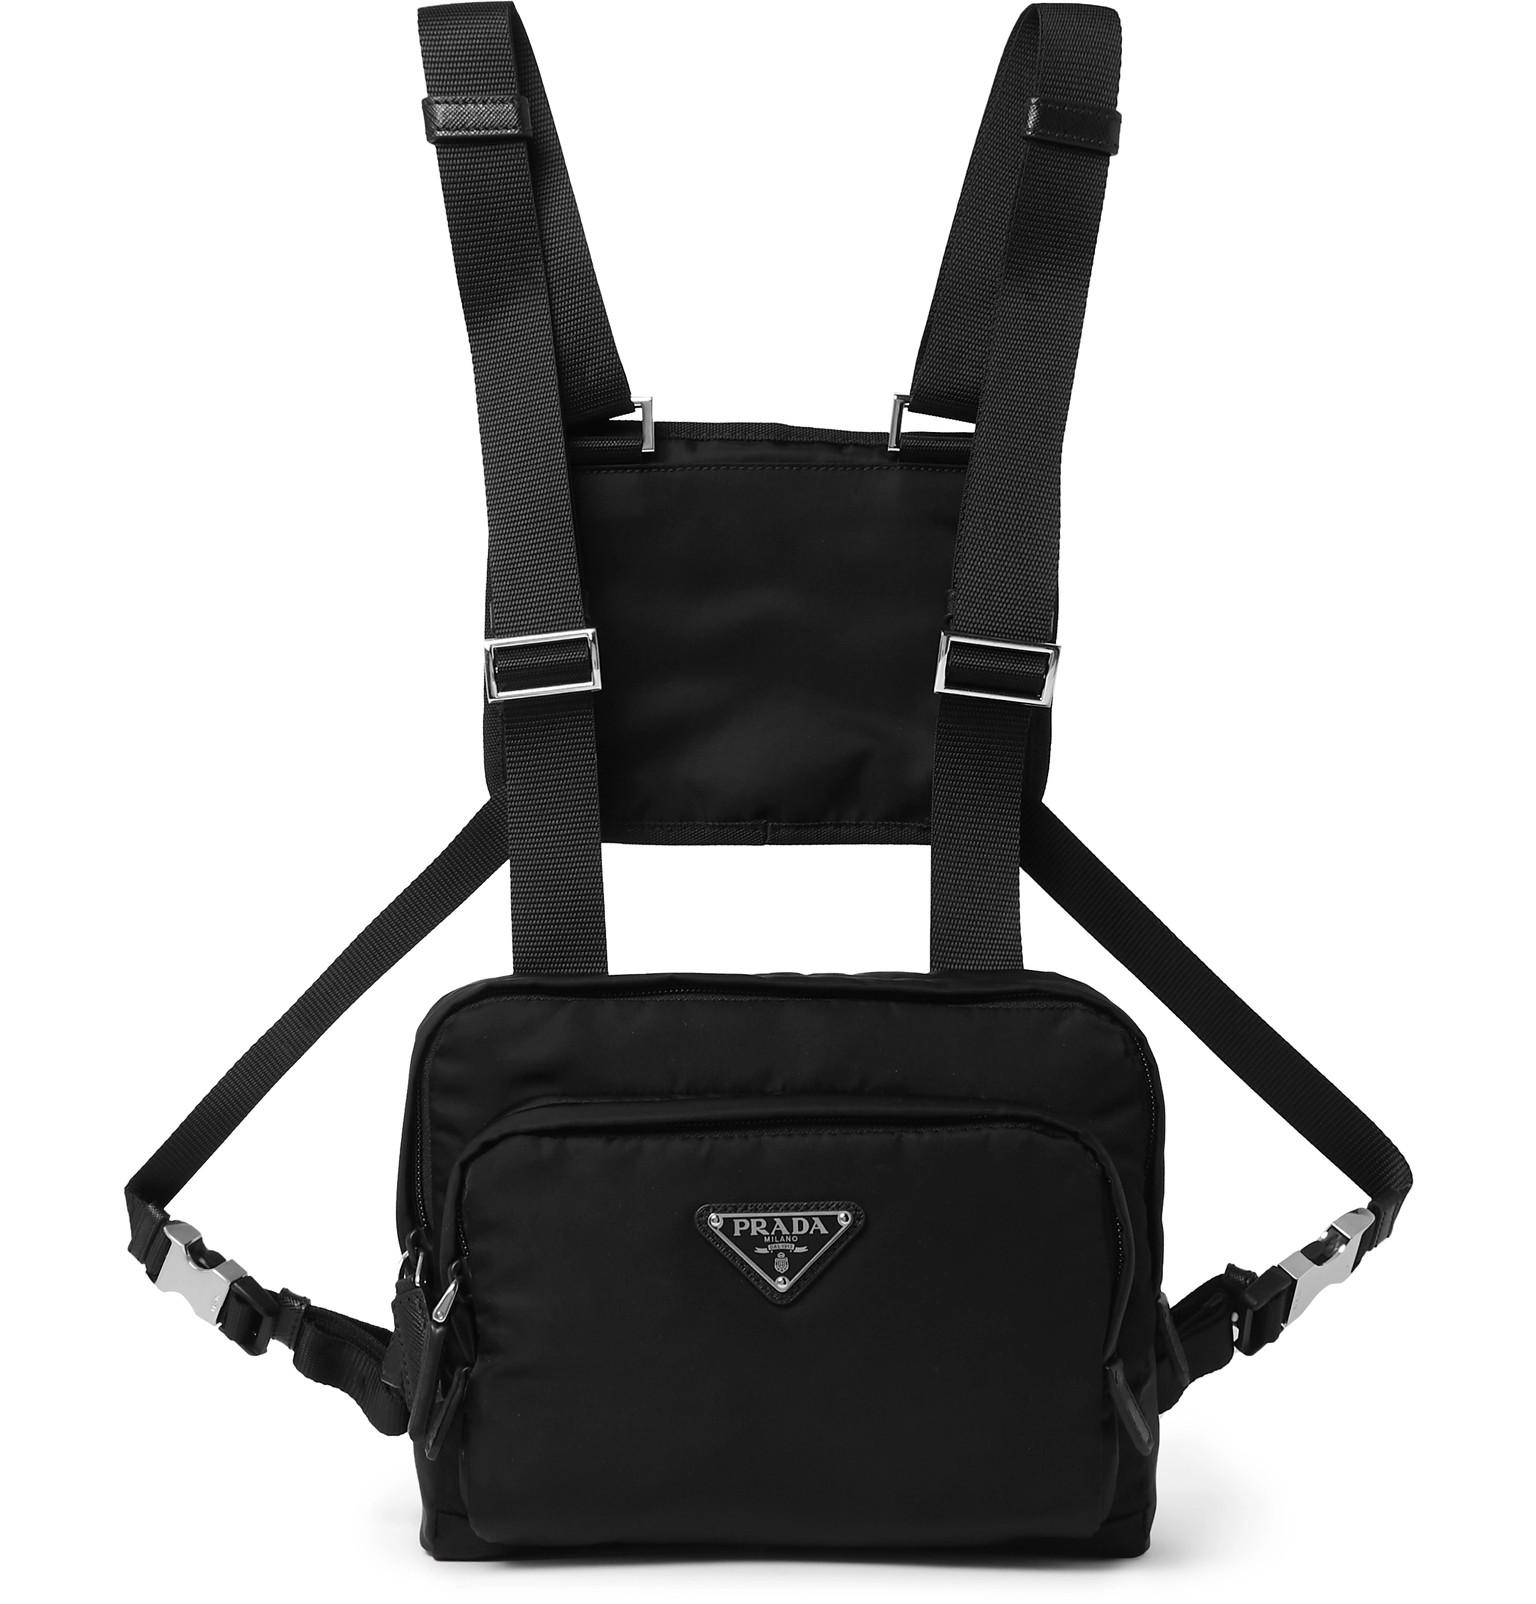 Prada Leather-trimmed Nylon Harness Bag in Black for Men - Lyst